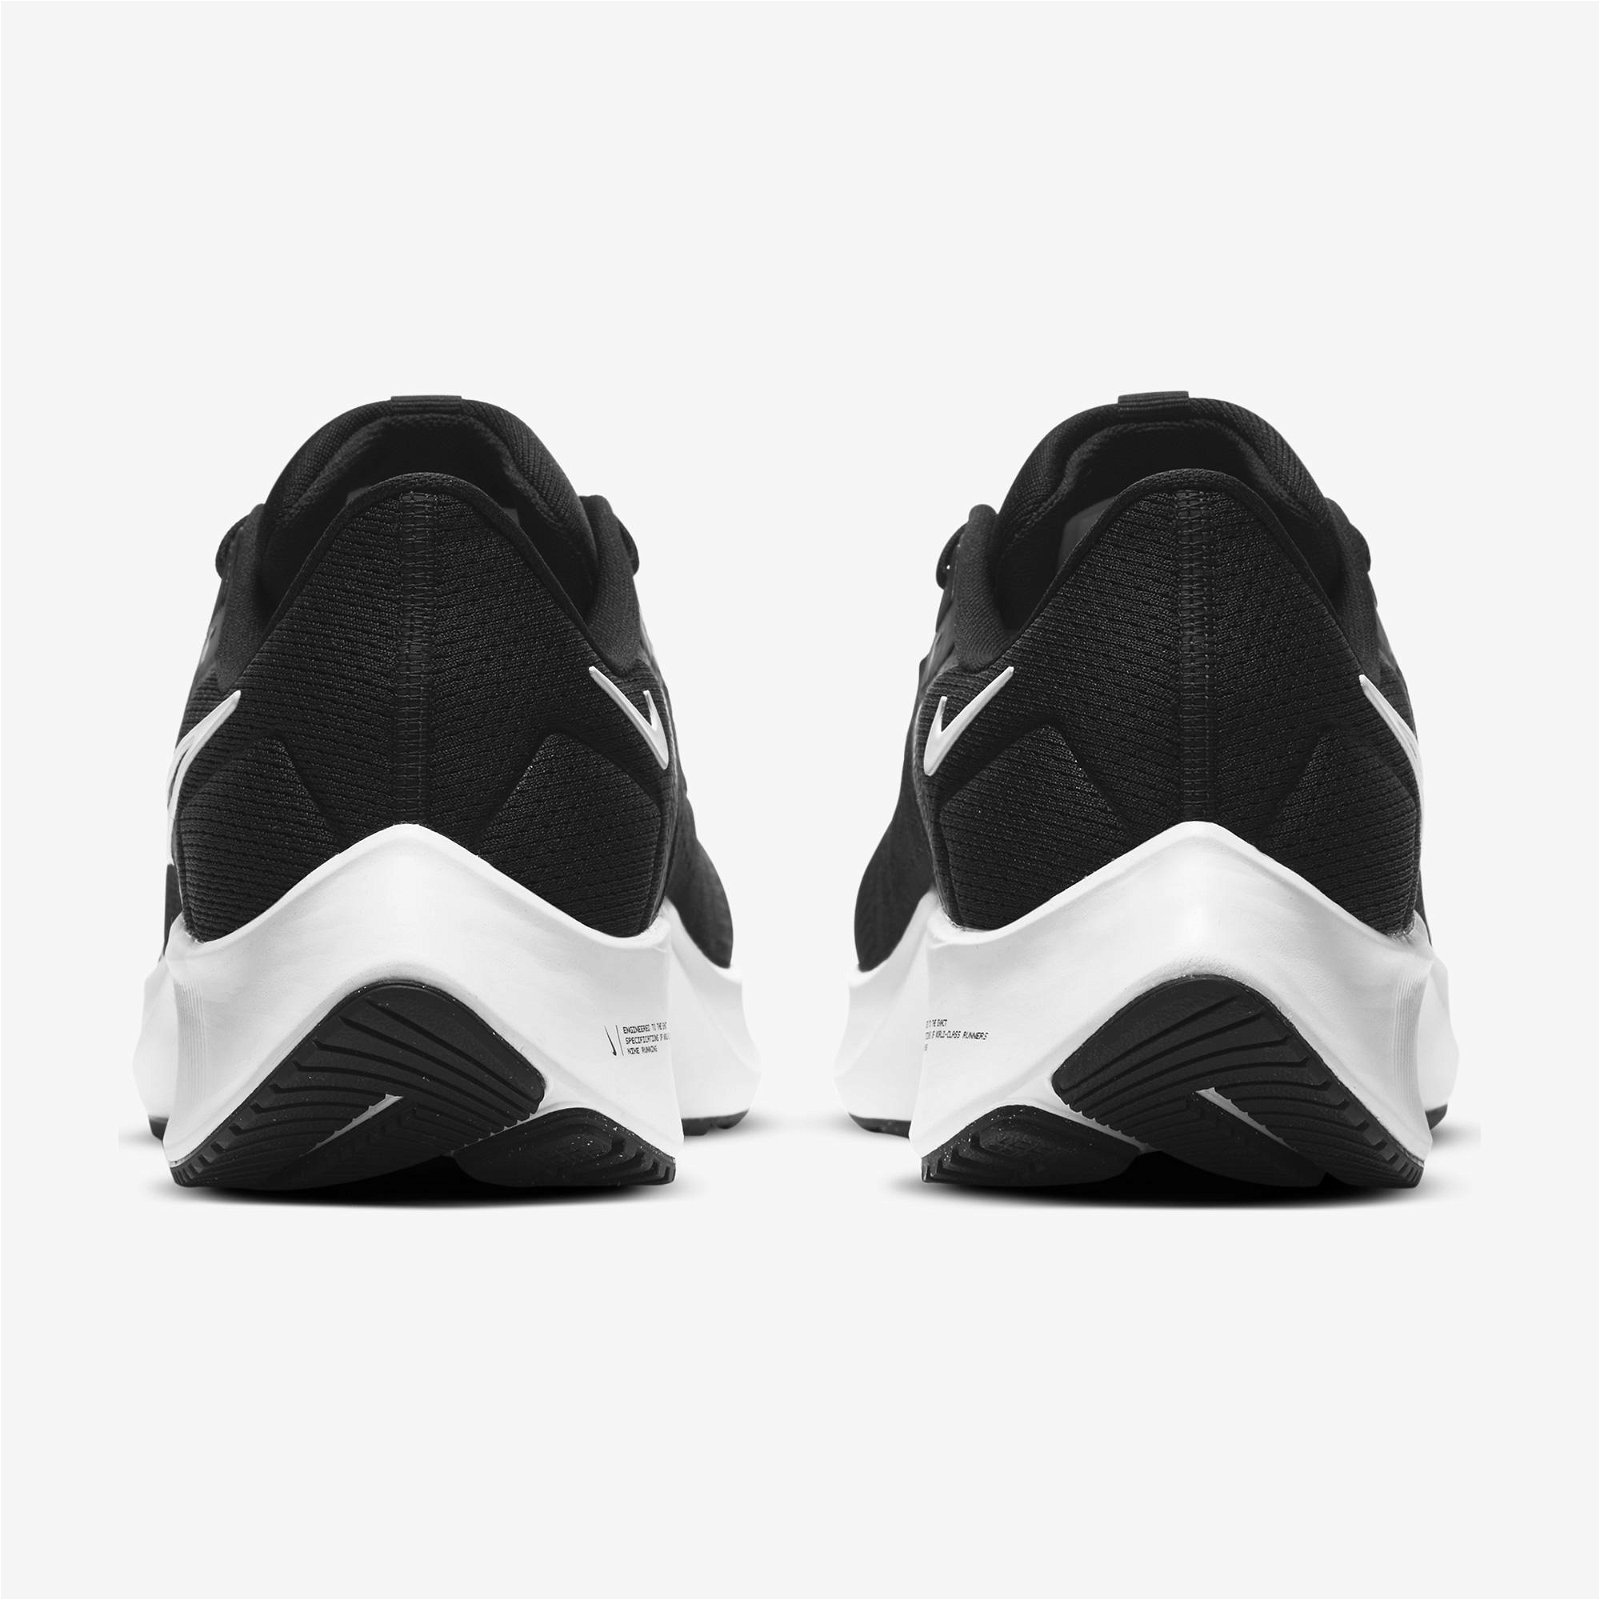 Nike Air Zoom Pegasus 38 Erkek Siyah/Gri/Gümüş Spor Ayakkabı